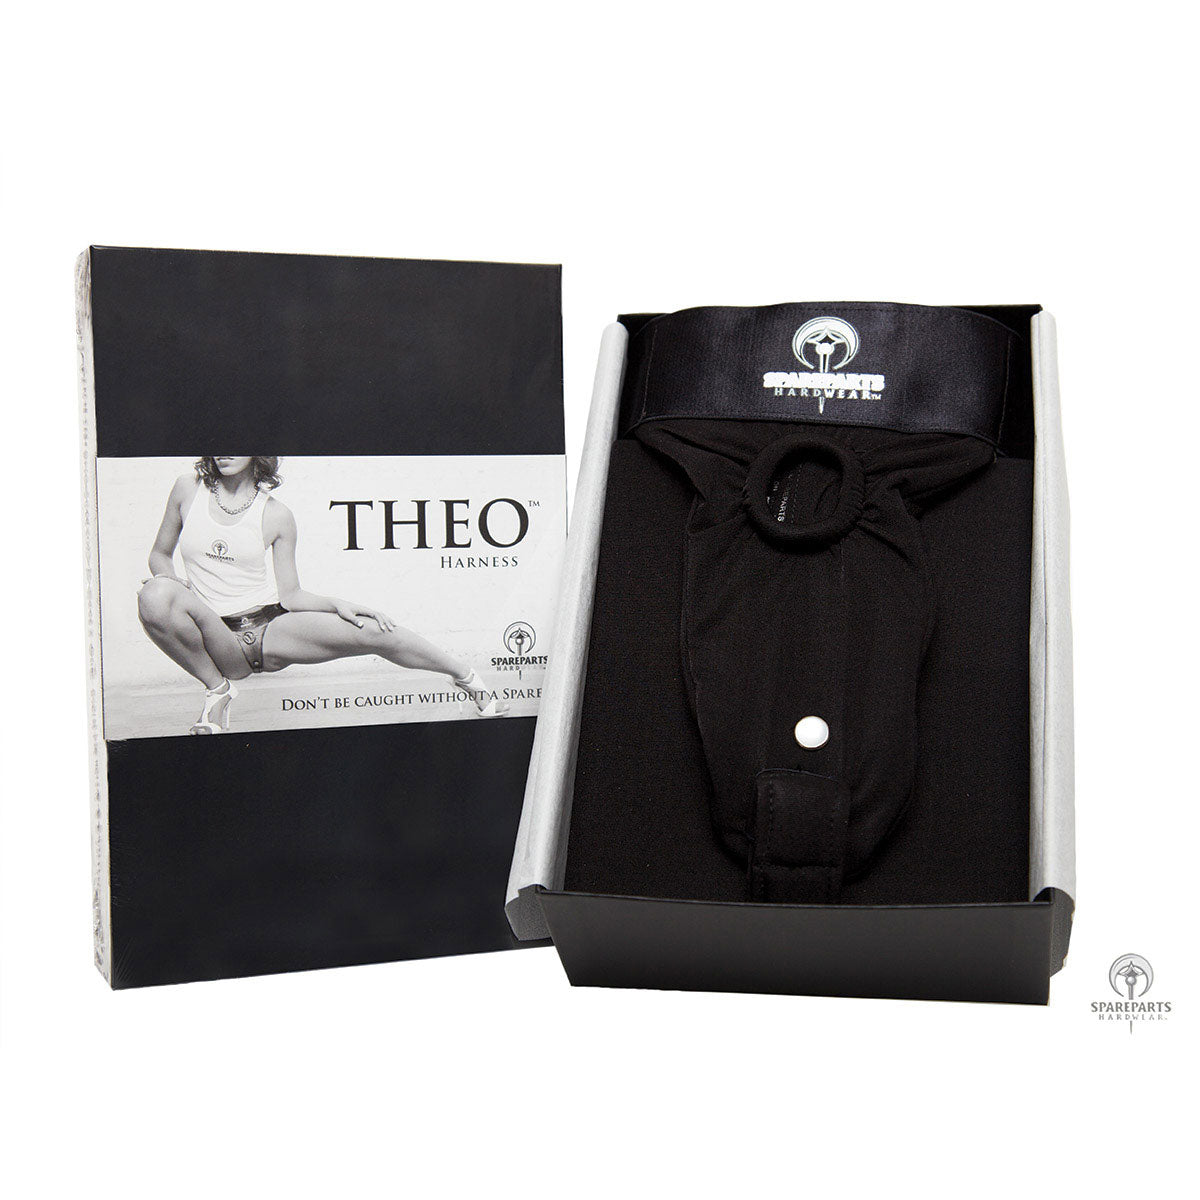 SpareParts Hardwear Theo Thong Strap-On Dildo Harness Black